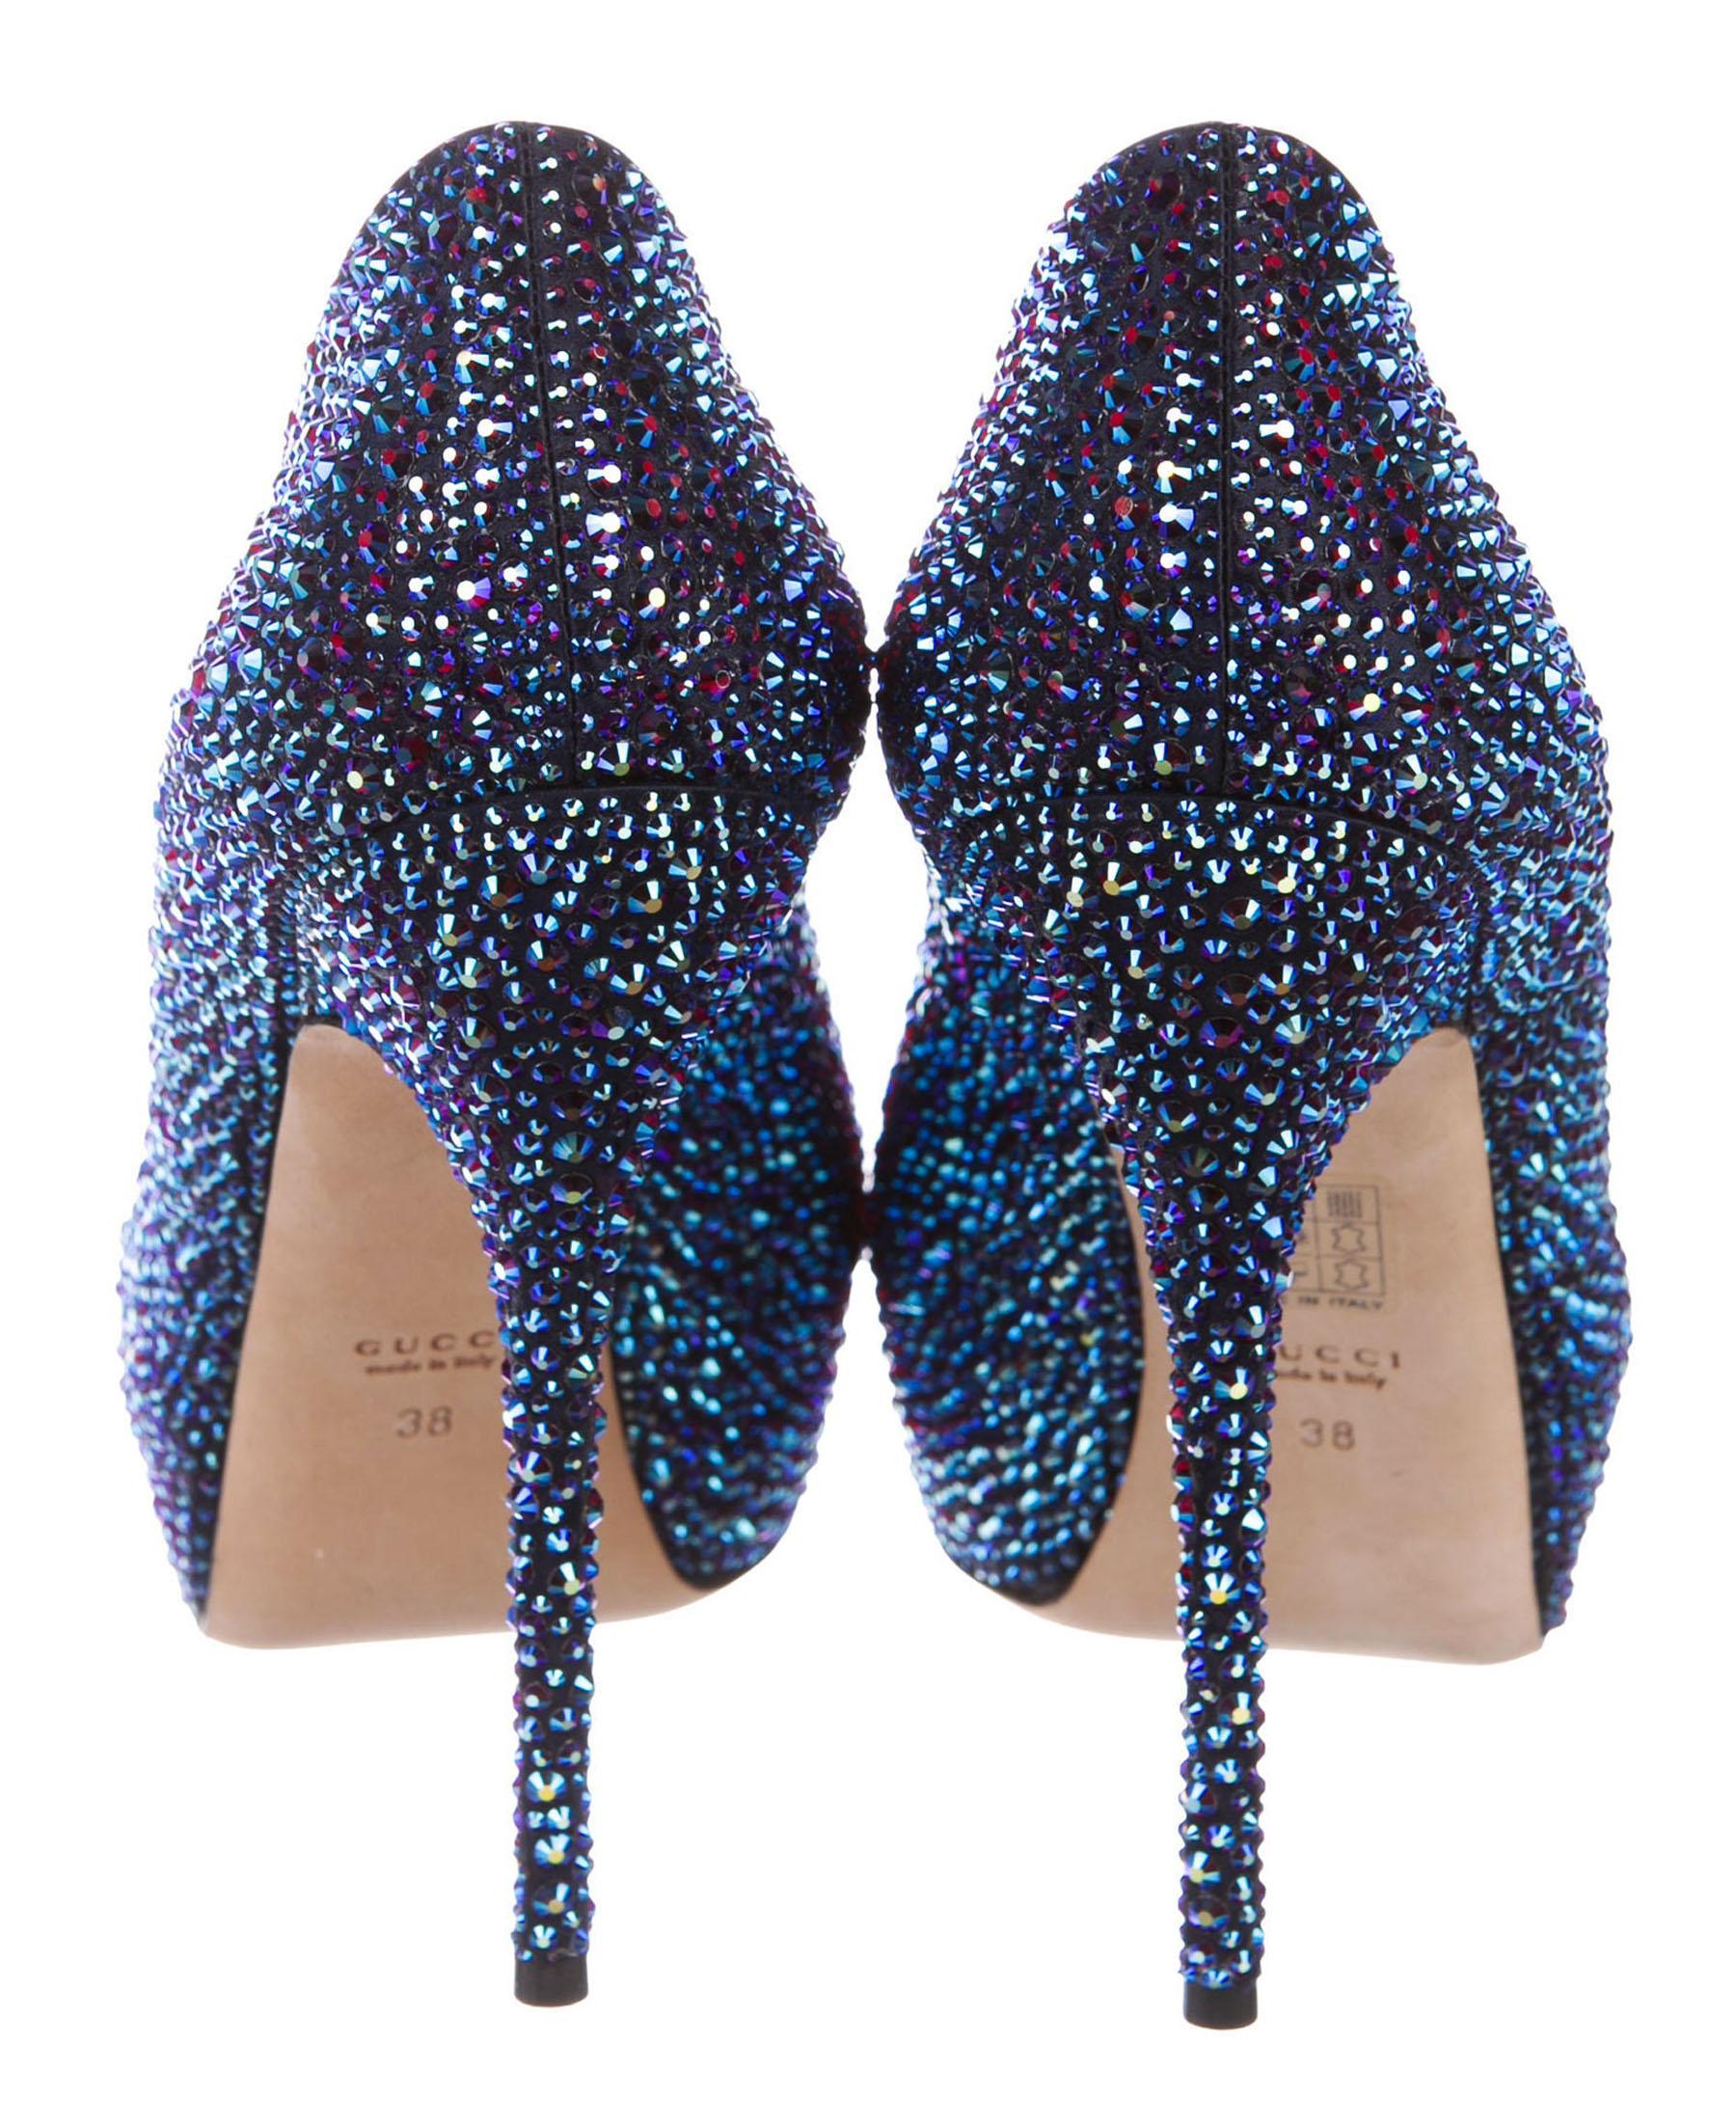 New $2 295 Gucci Sofia Etoile Blue Crystal Encrusted Peep Toe High-Heel Pump 38 en vente 4